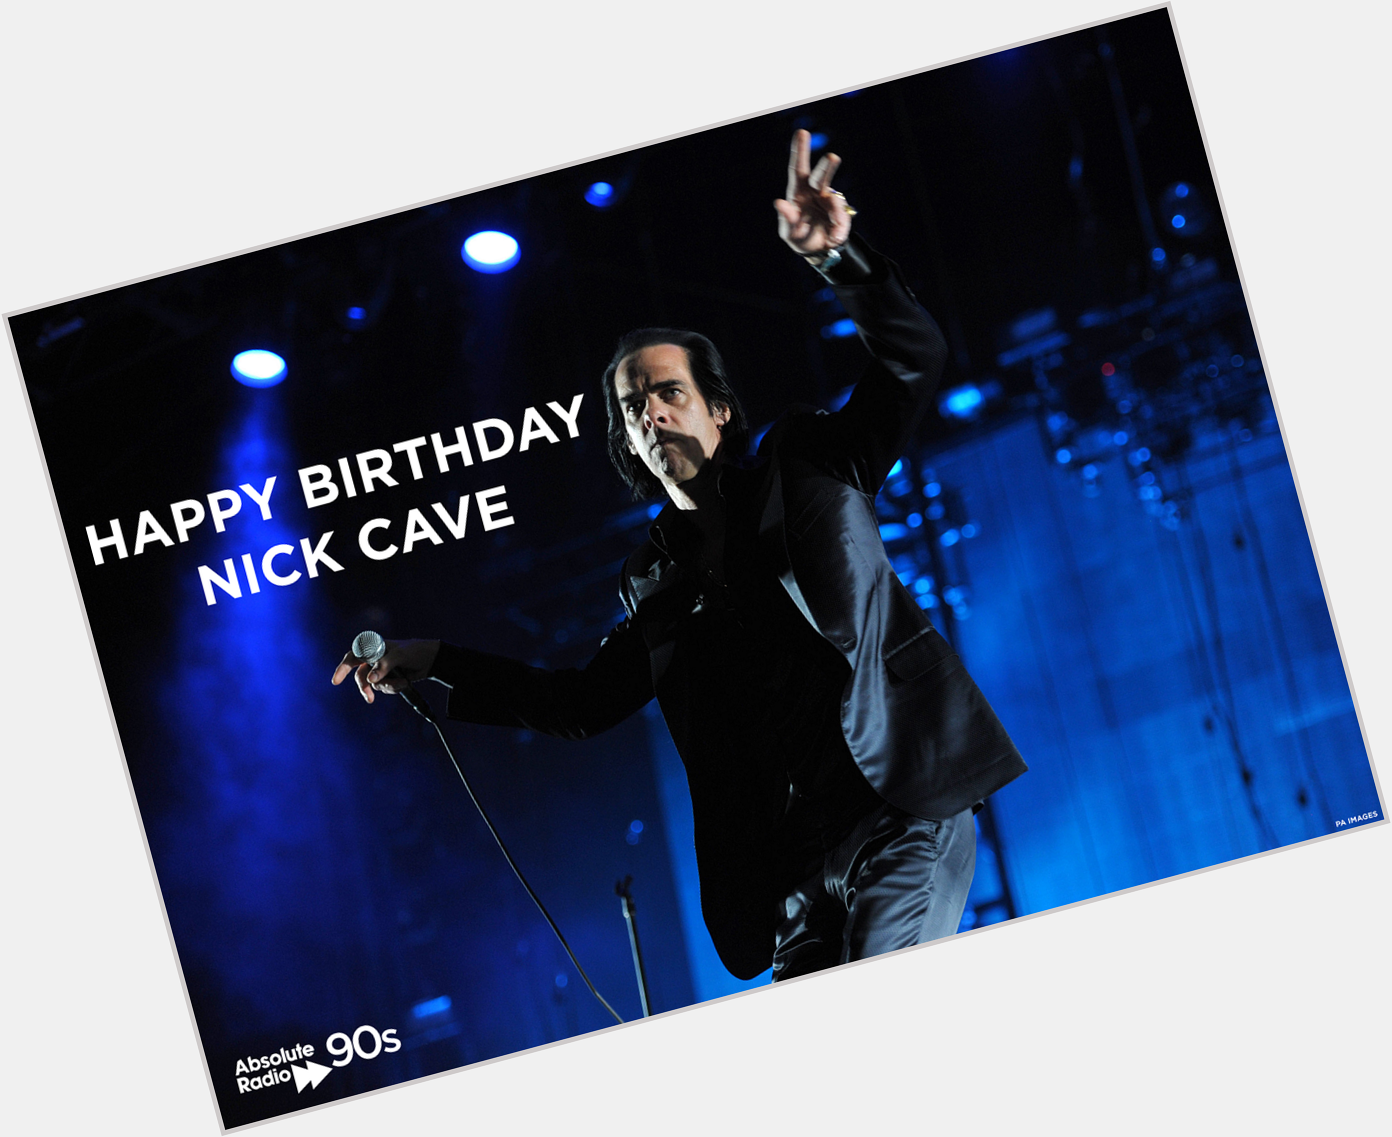 Wishing Mr. Nick Cave a massive Happy Birthday! 